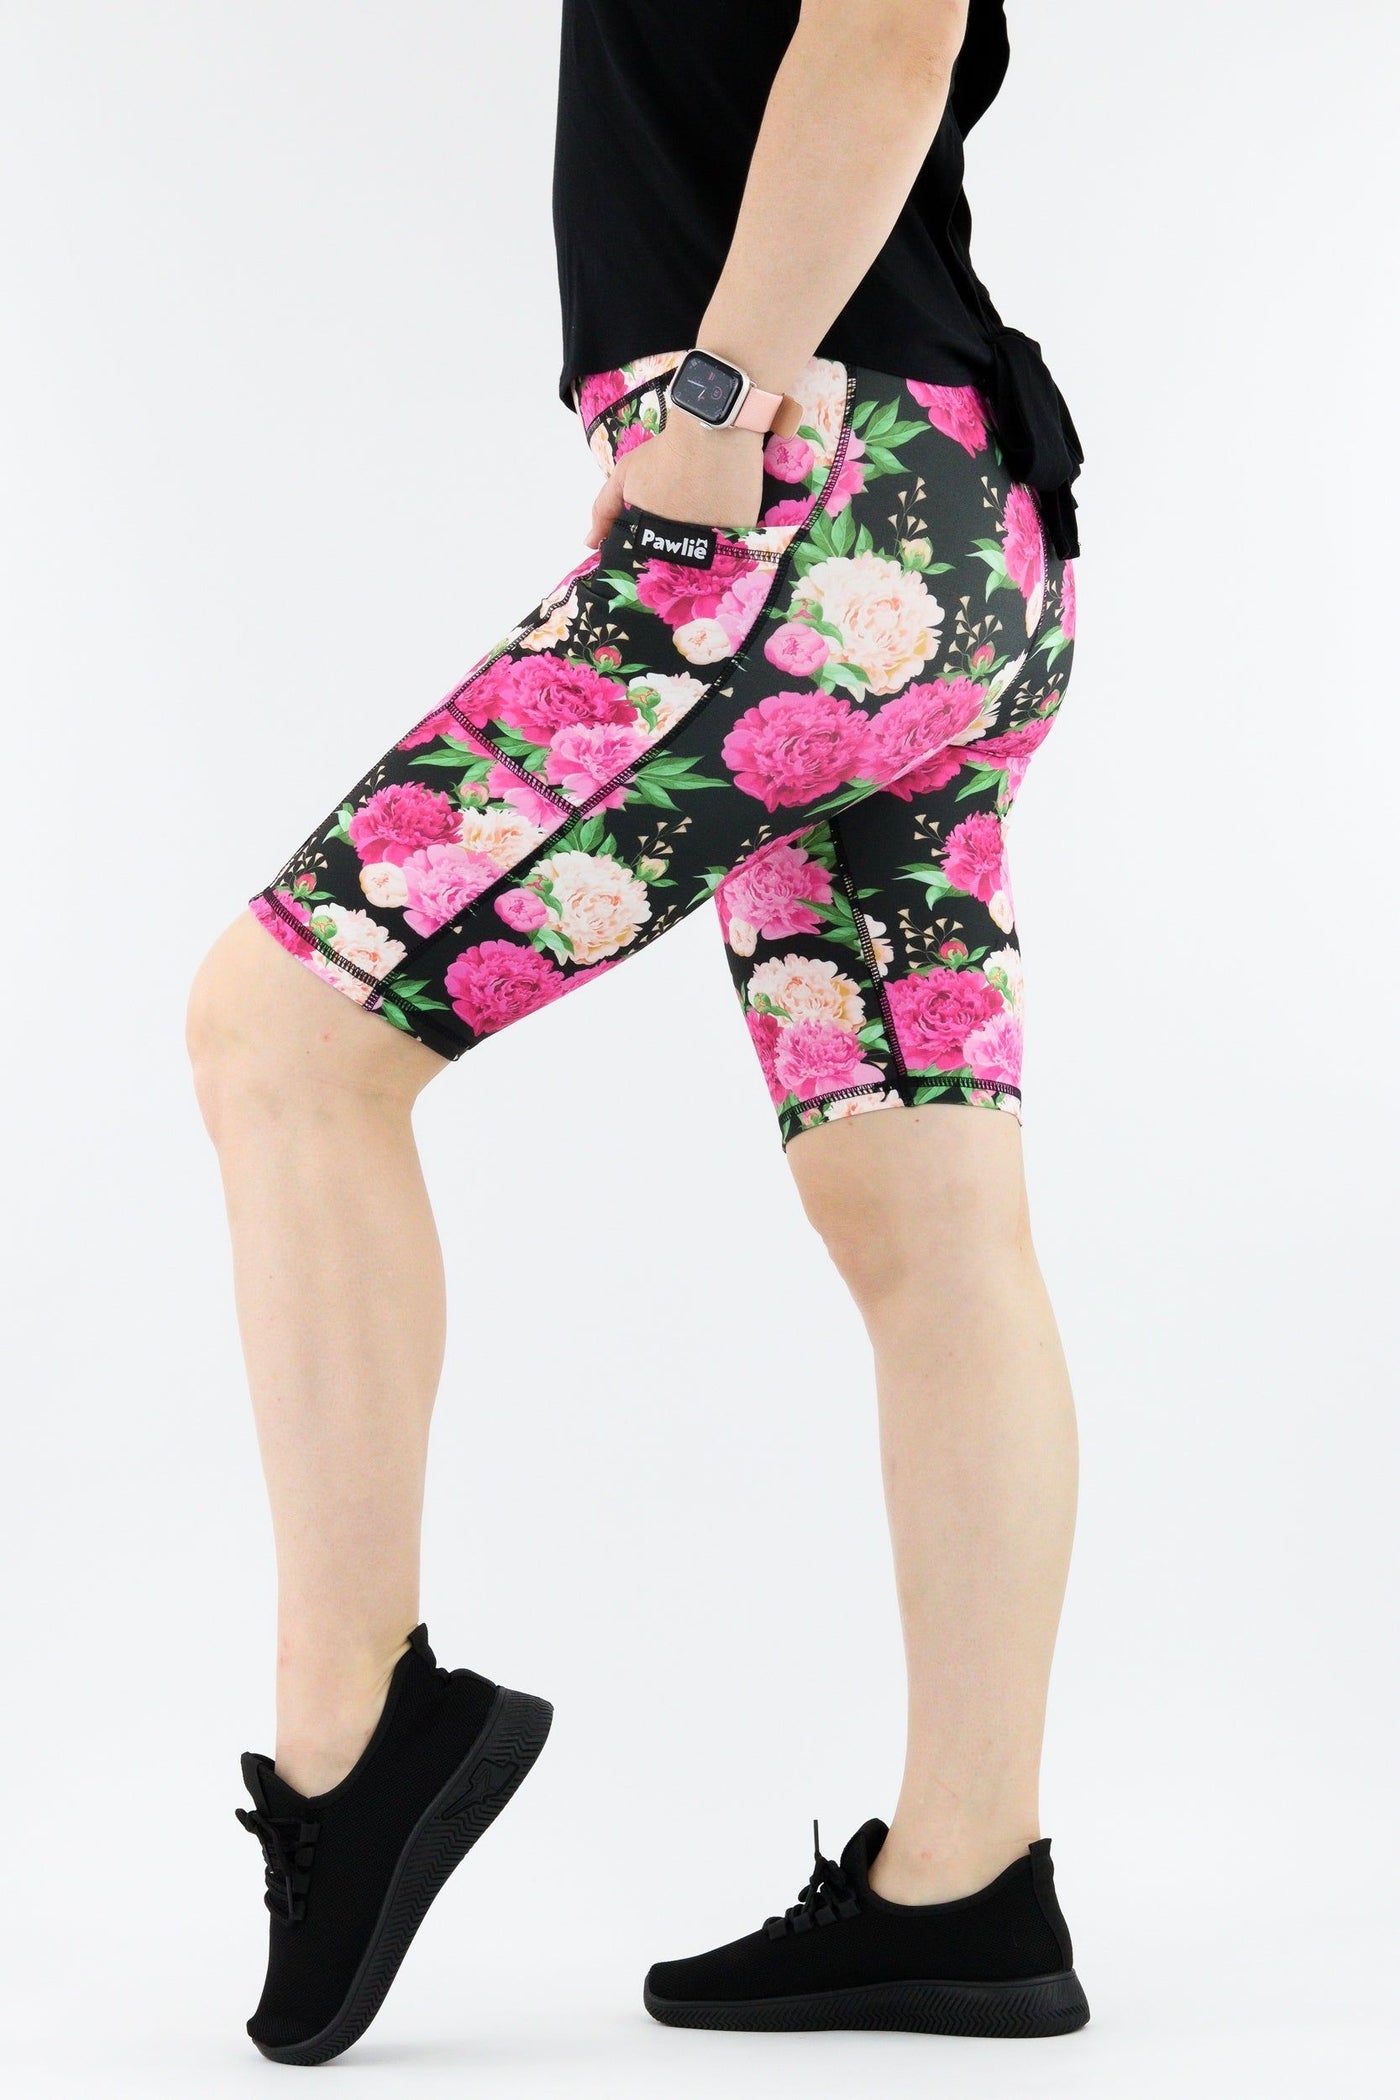 Pretty Peonies - Hybrid 1.0 - Leg Pockets - Long Shorts Hybrid Shorts Pawlie   